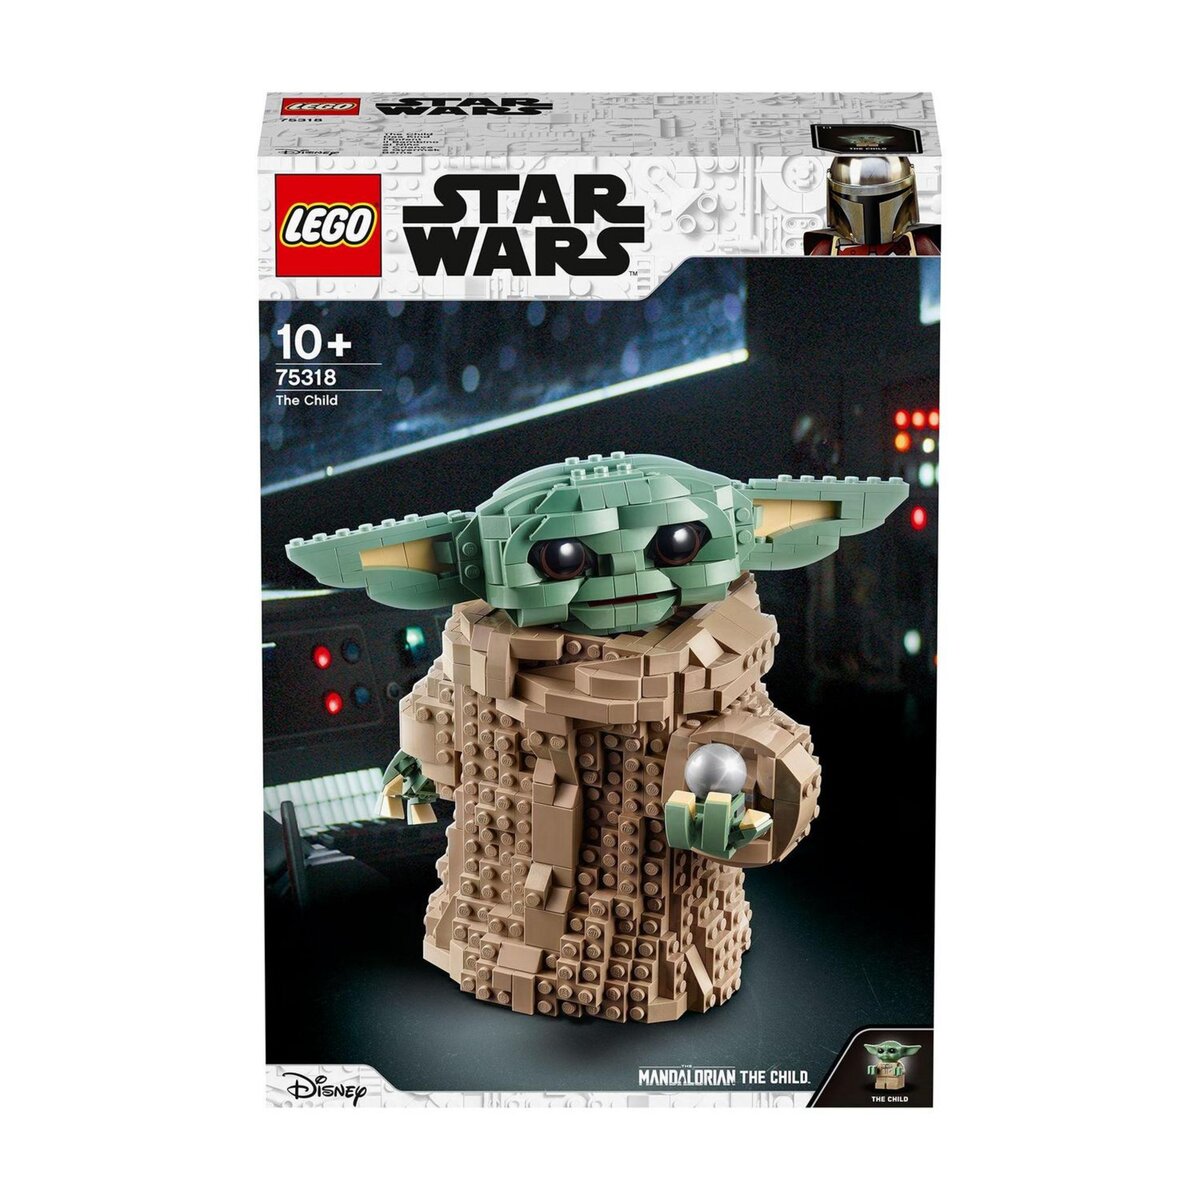 Lego Star Wars pas cher